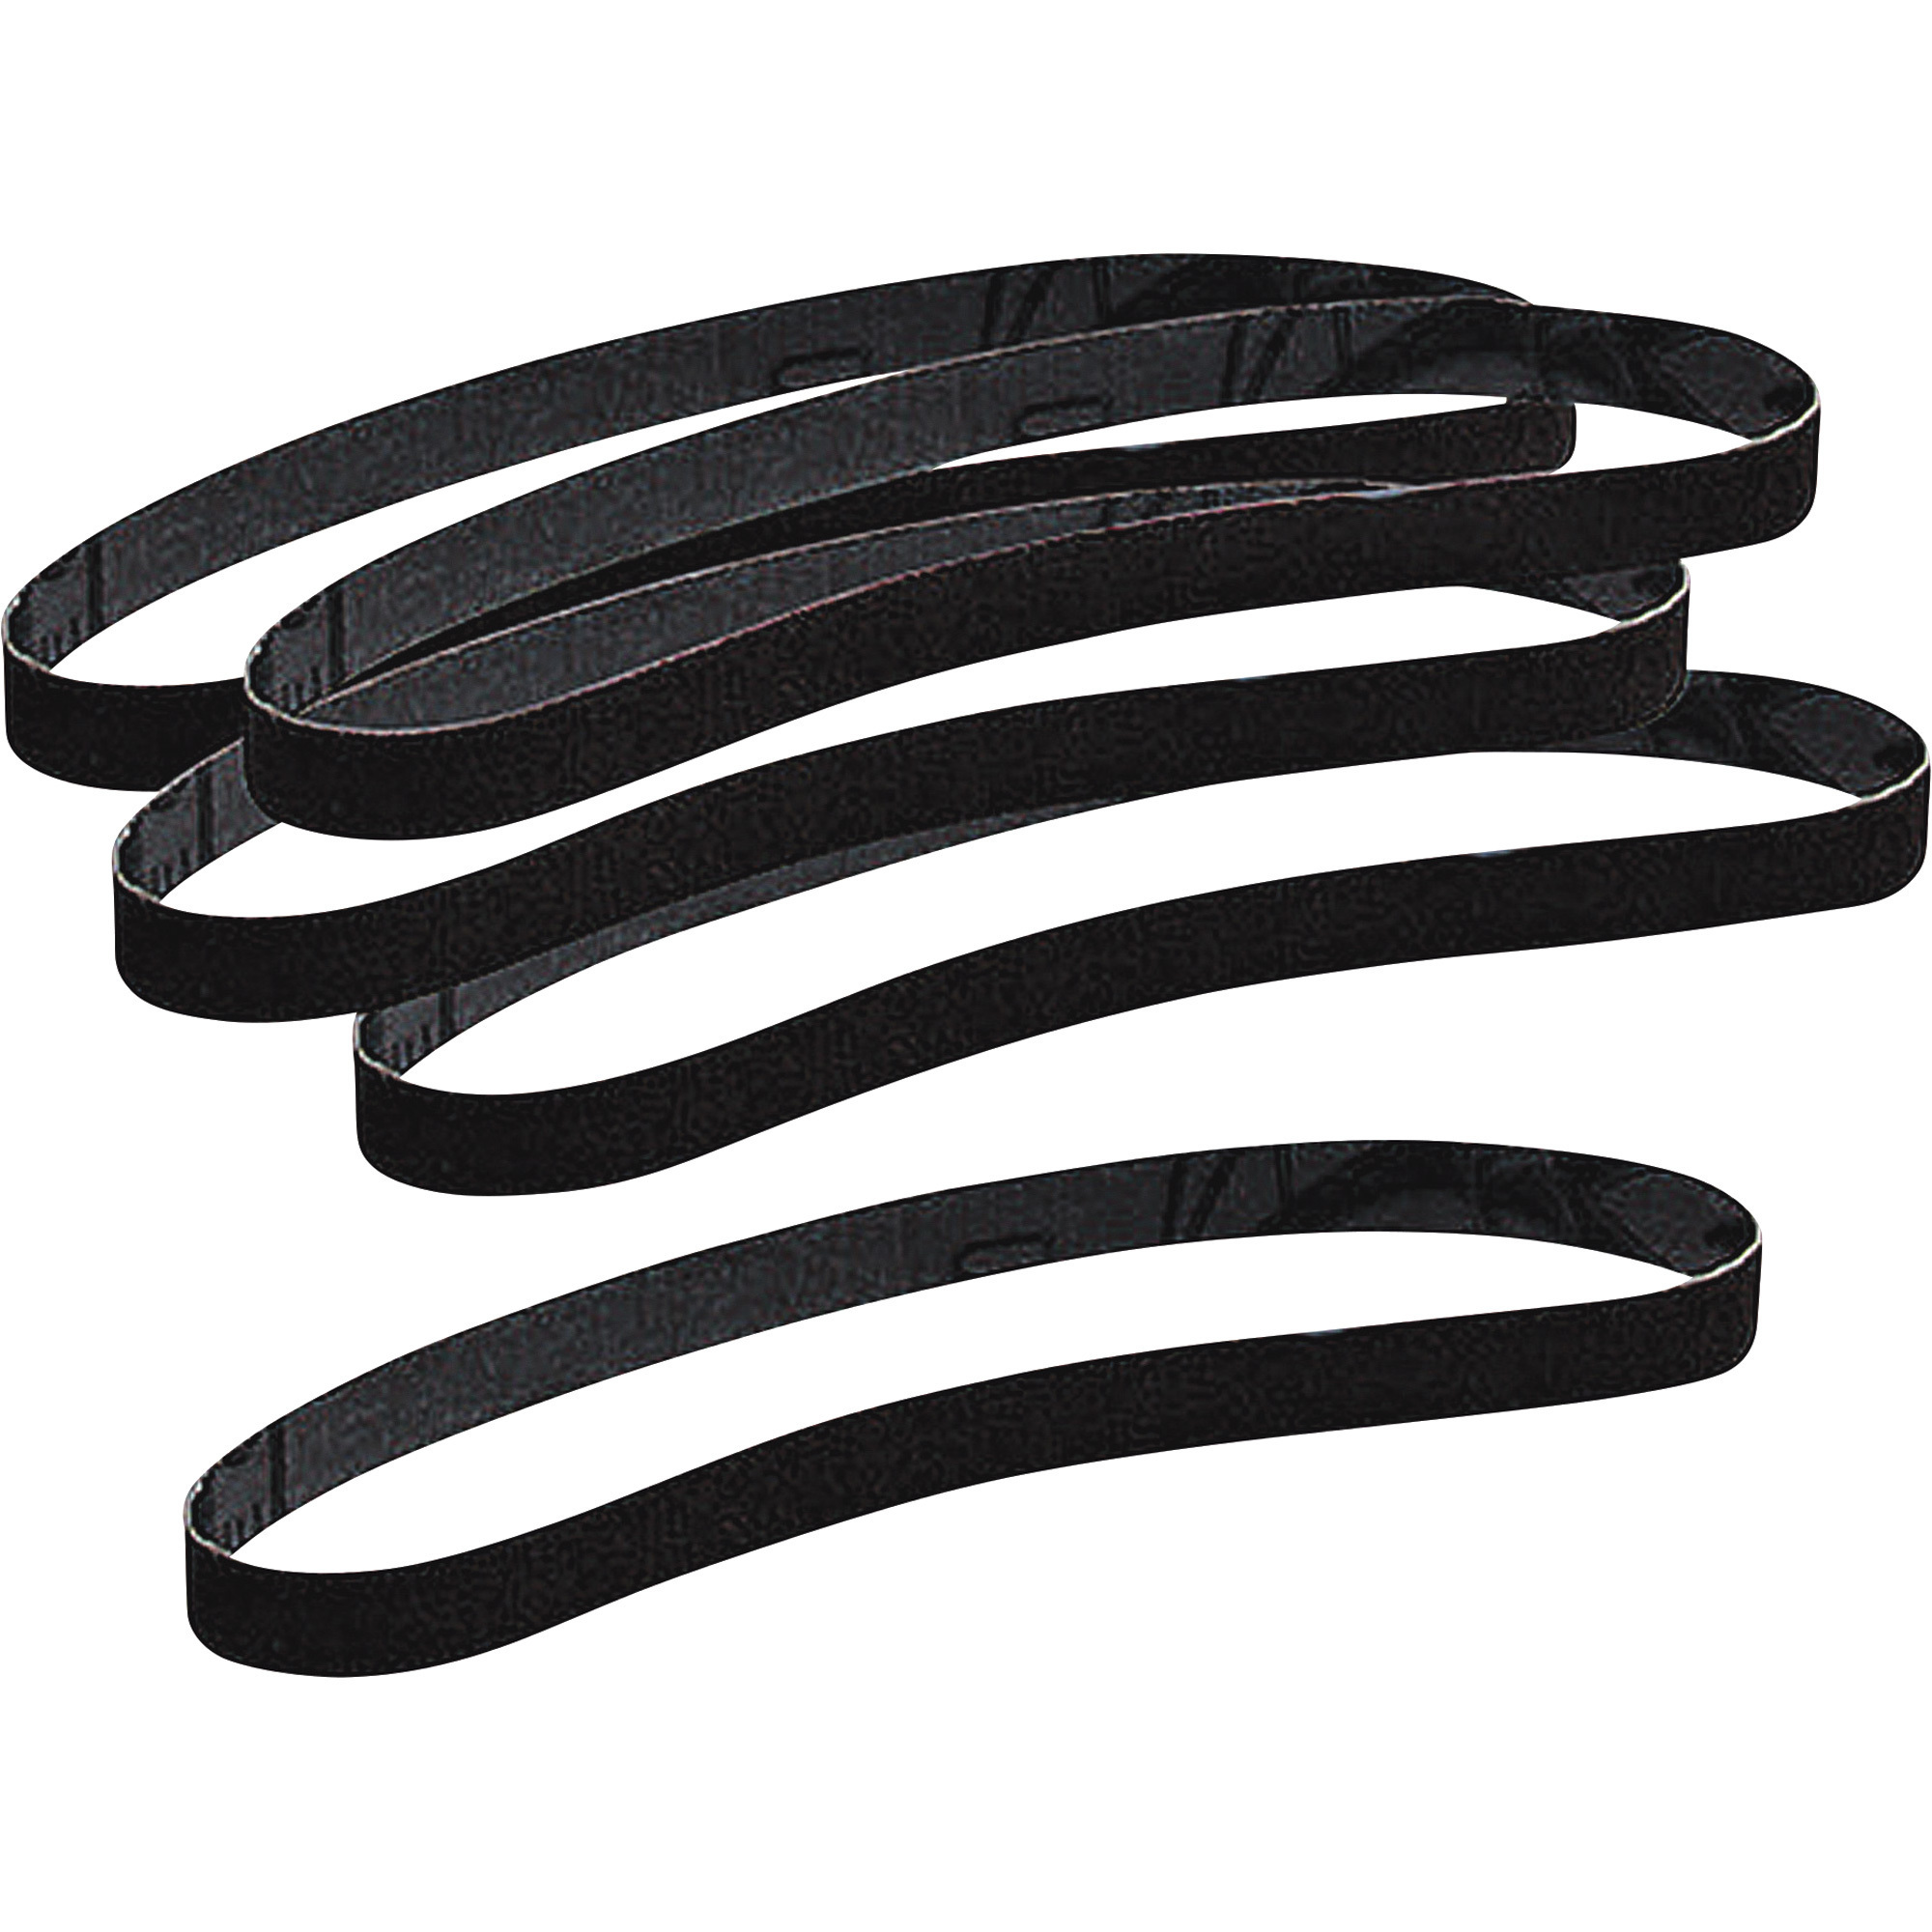 Klutch Air Sander Belts, 5-Pack